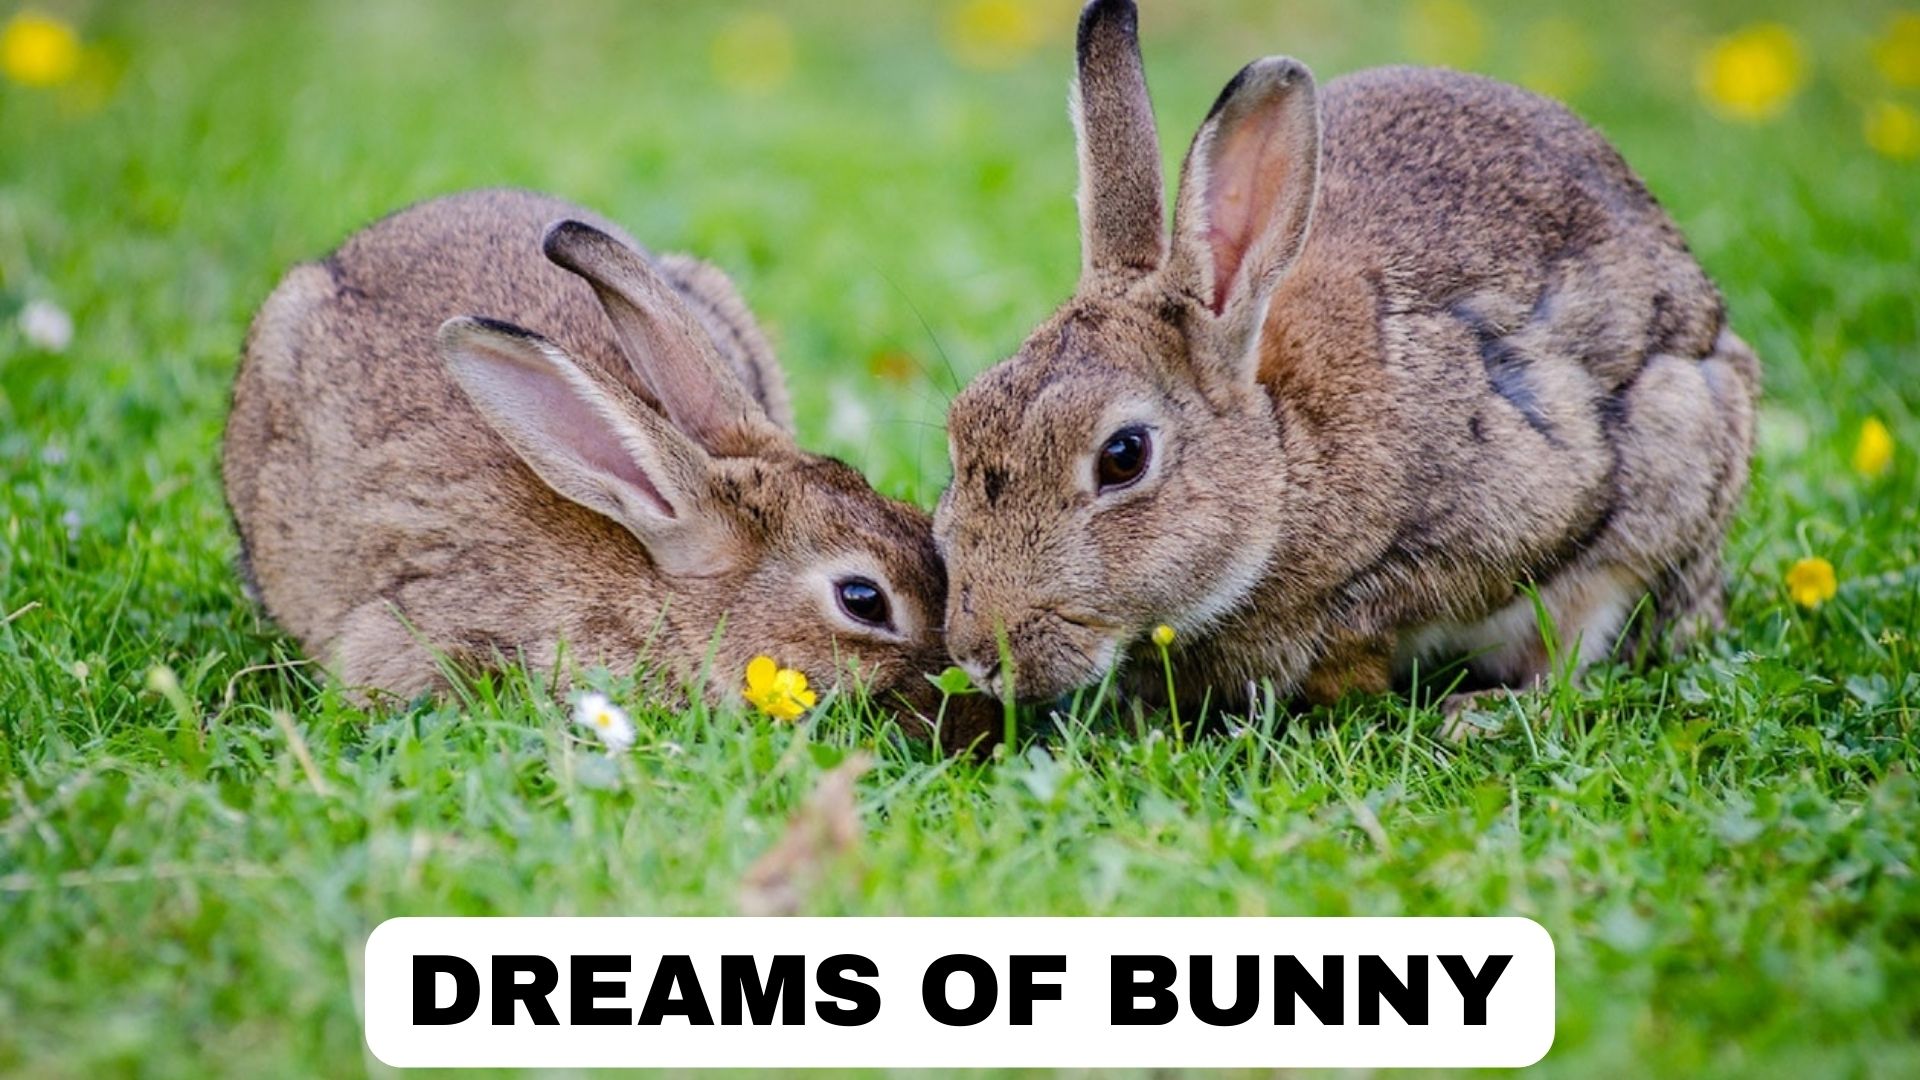 Dreams Of Bunny - Represent Rebirth And New Life